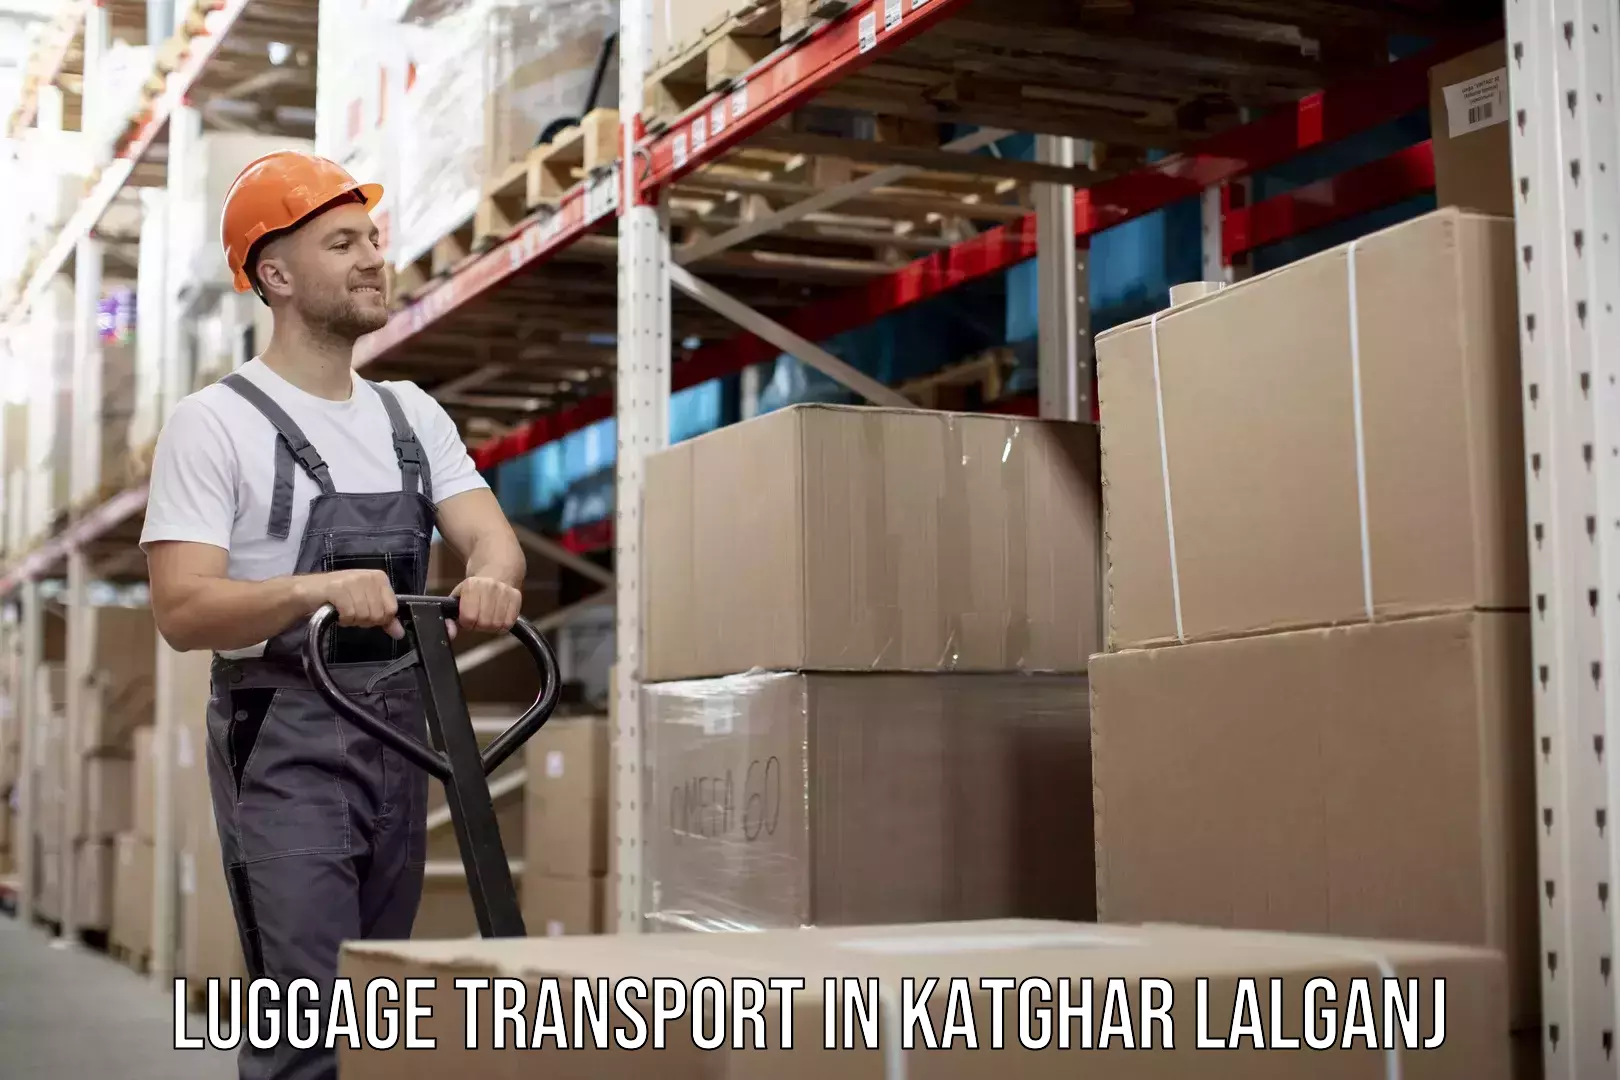 Excess baggage transport in Katghar Lalganj